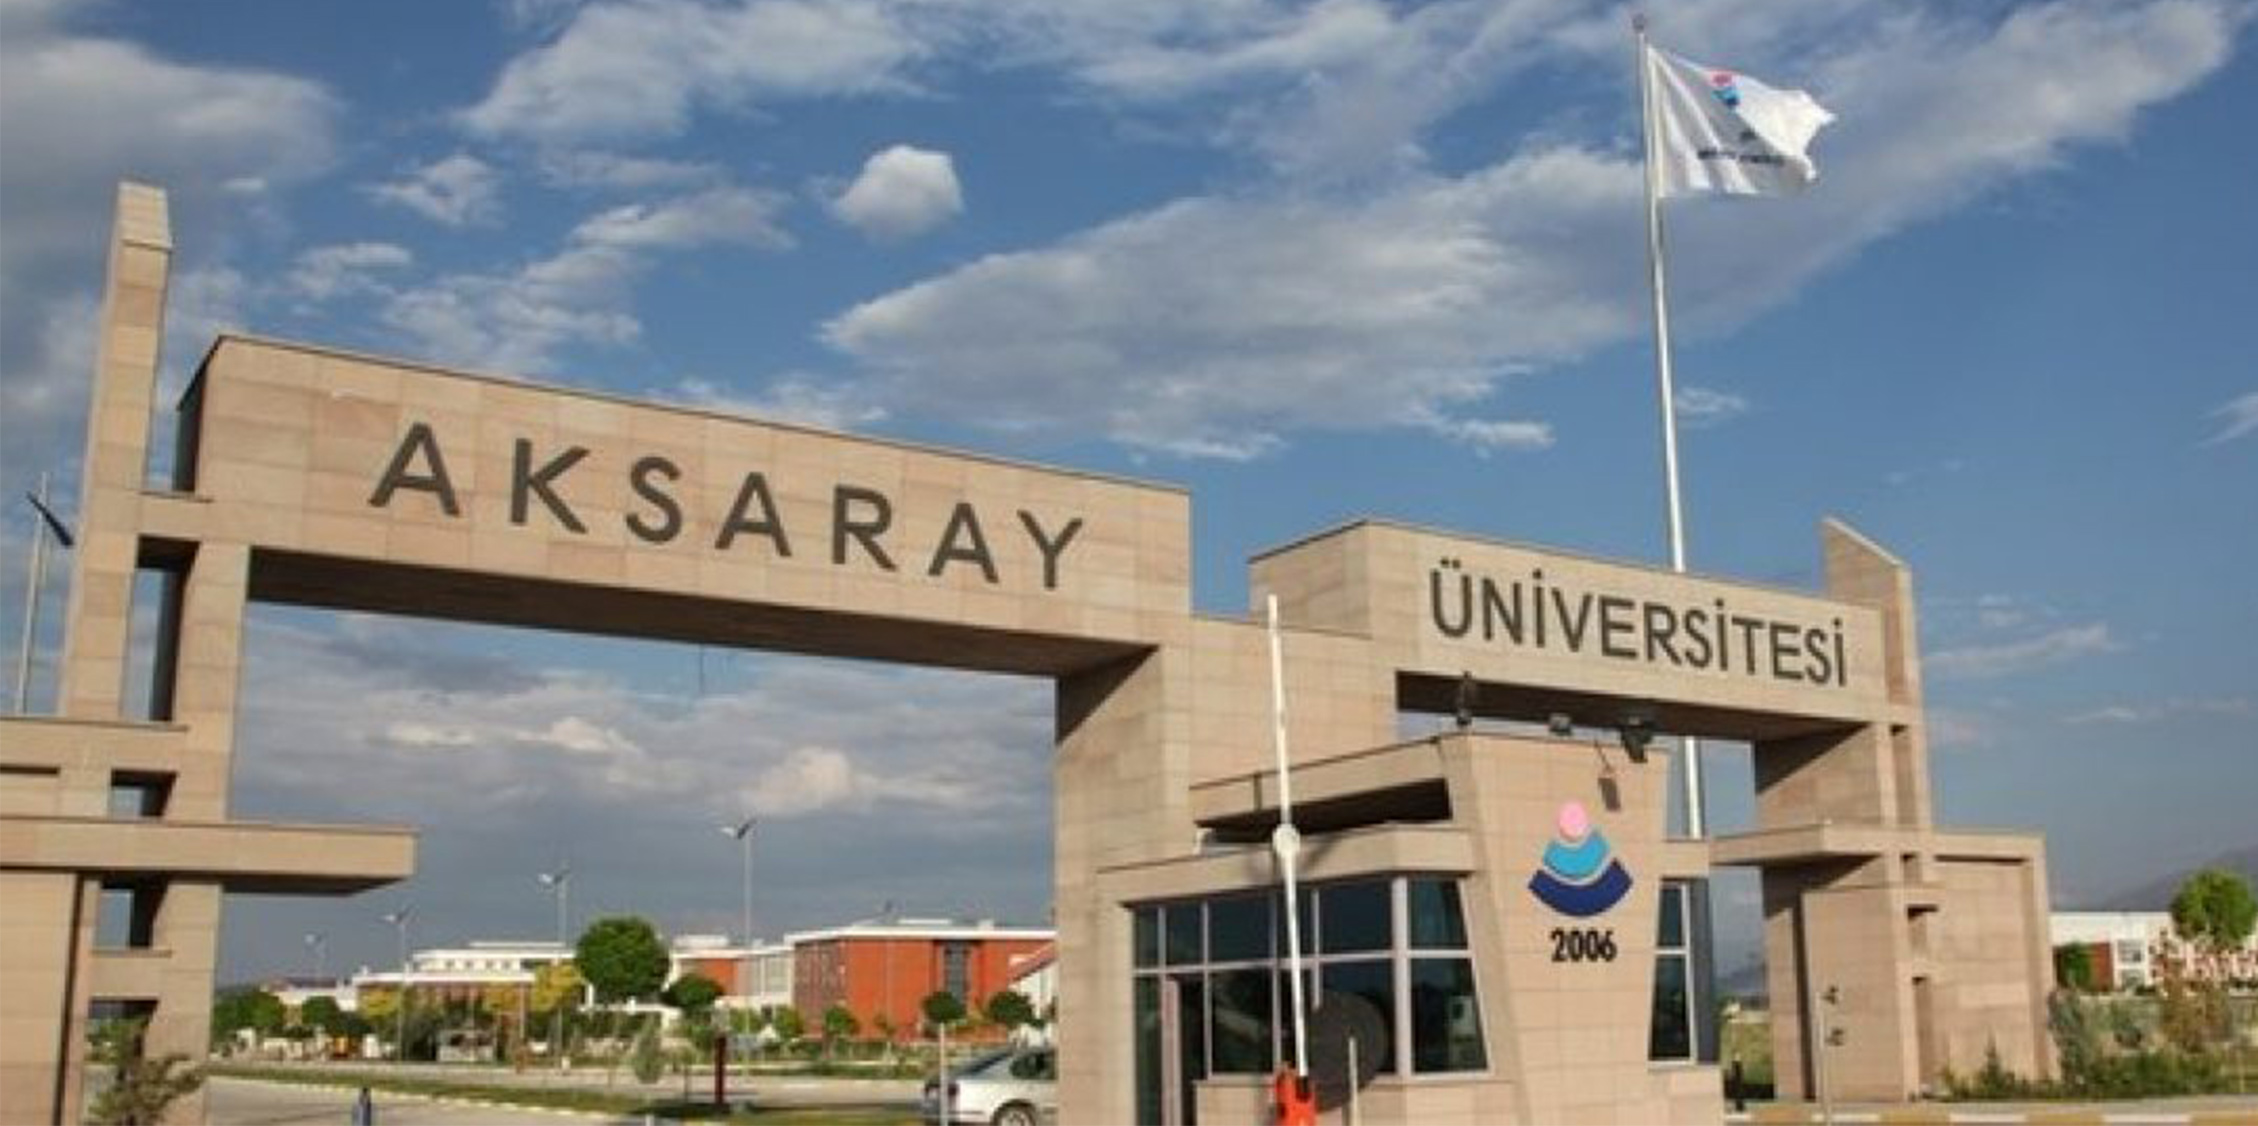 aksaray universitesi find and study 1 - L'université d'Aksaray